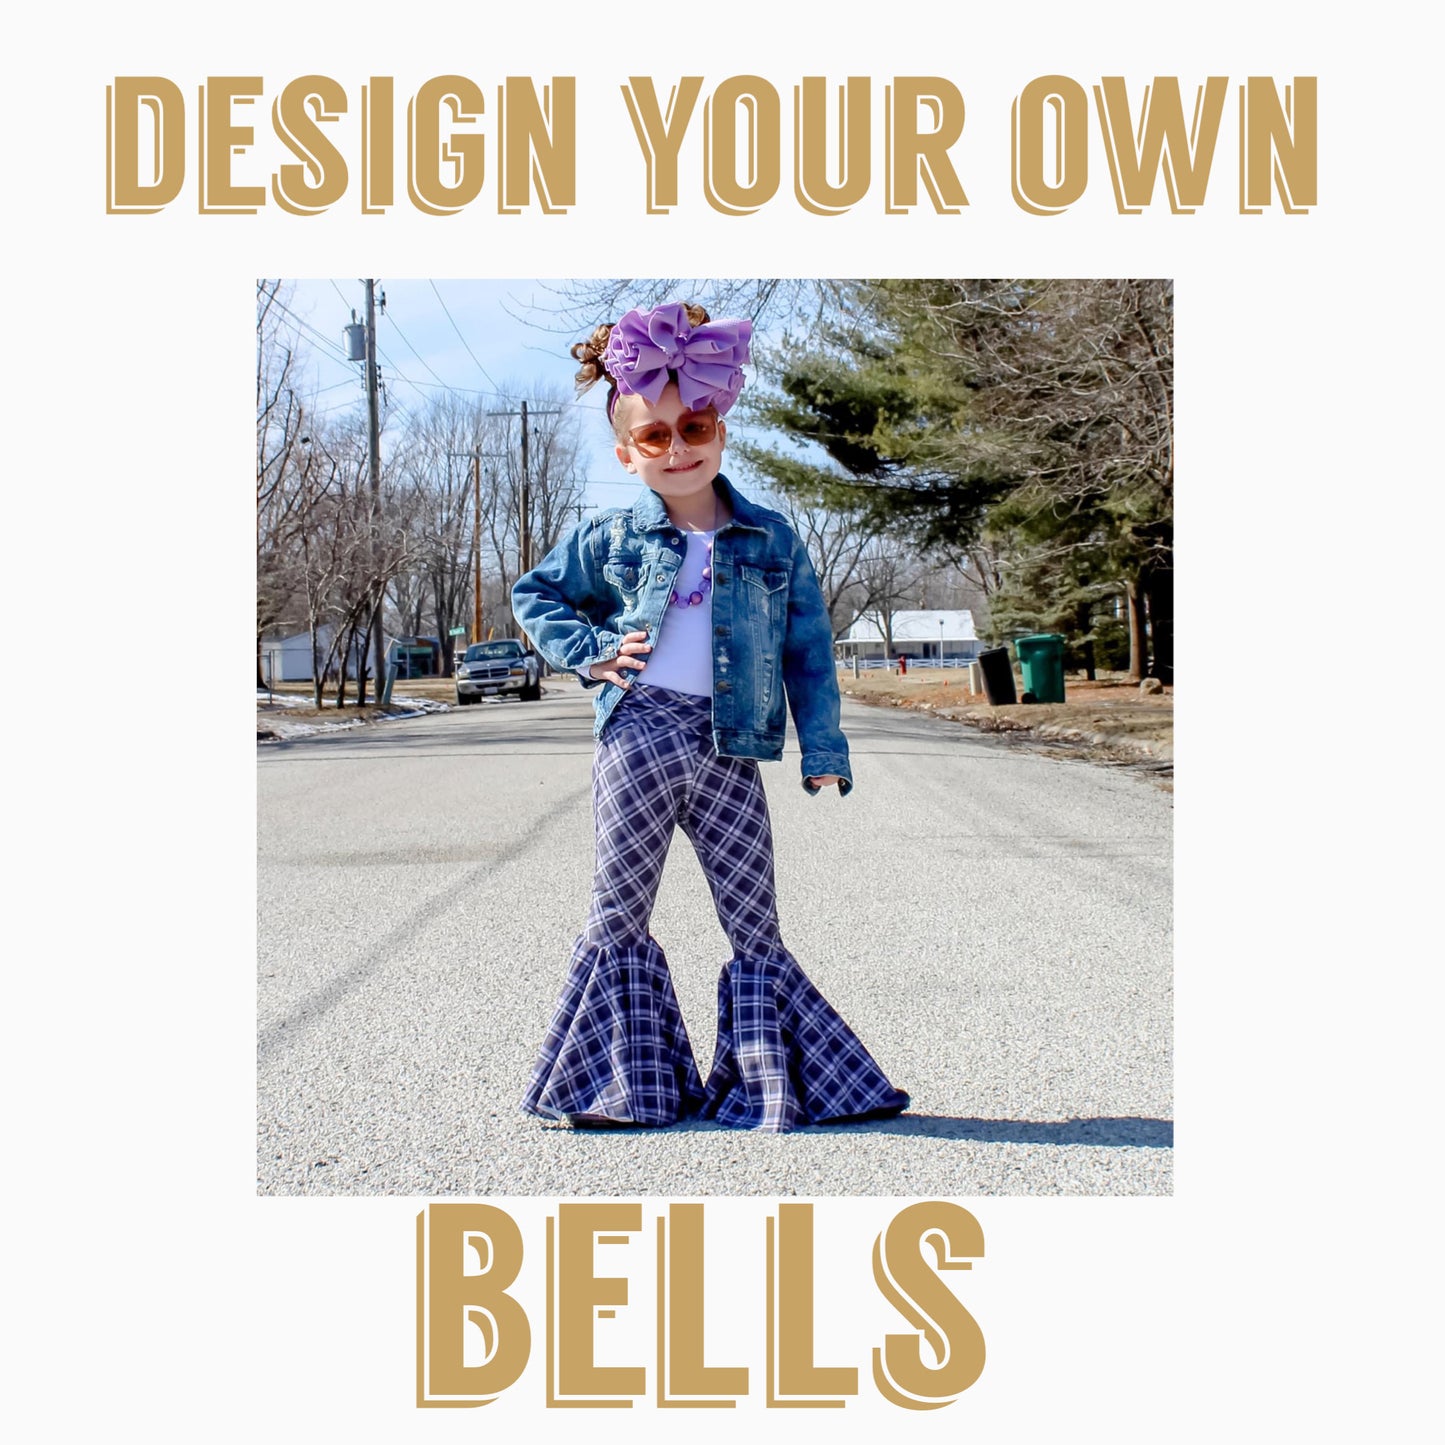 Design Your Own | Bells